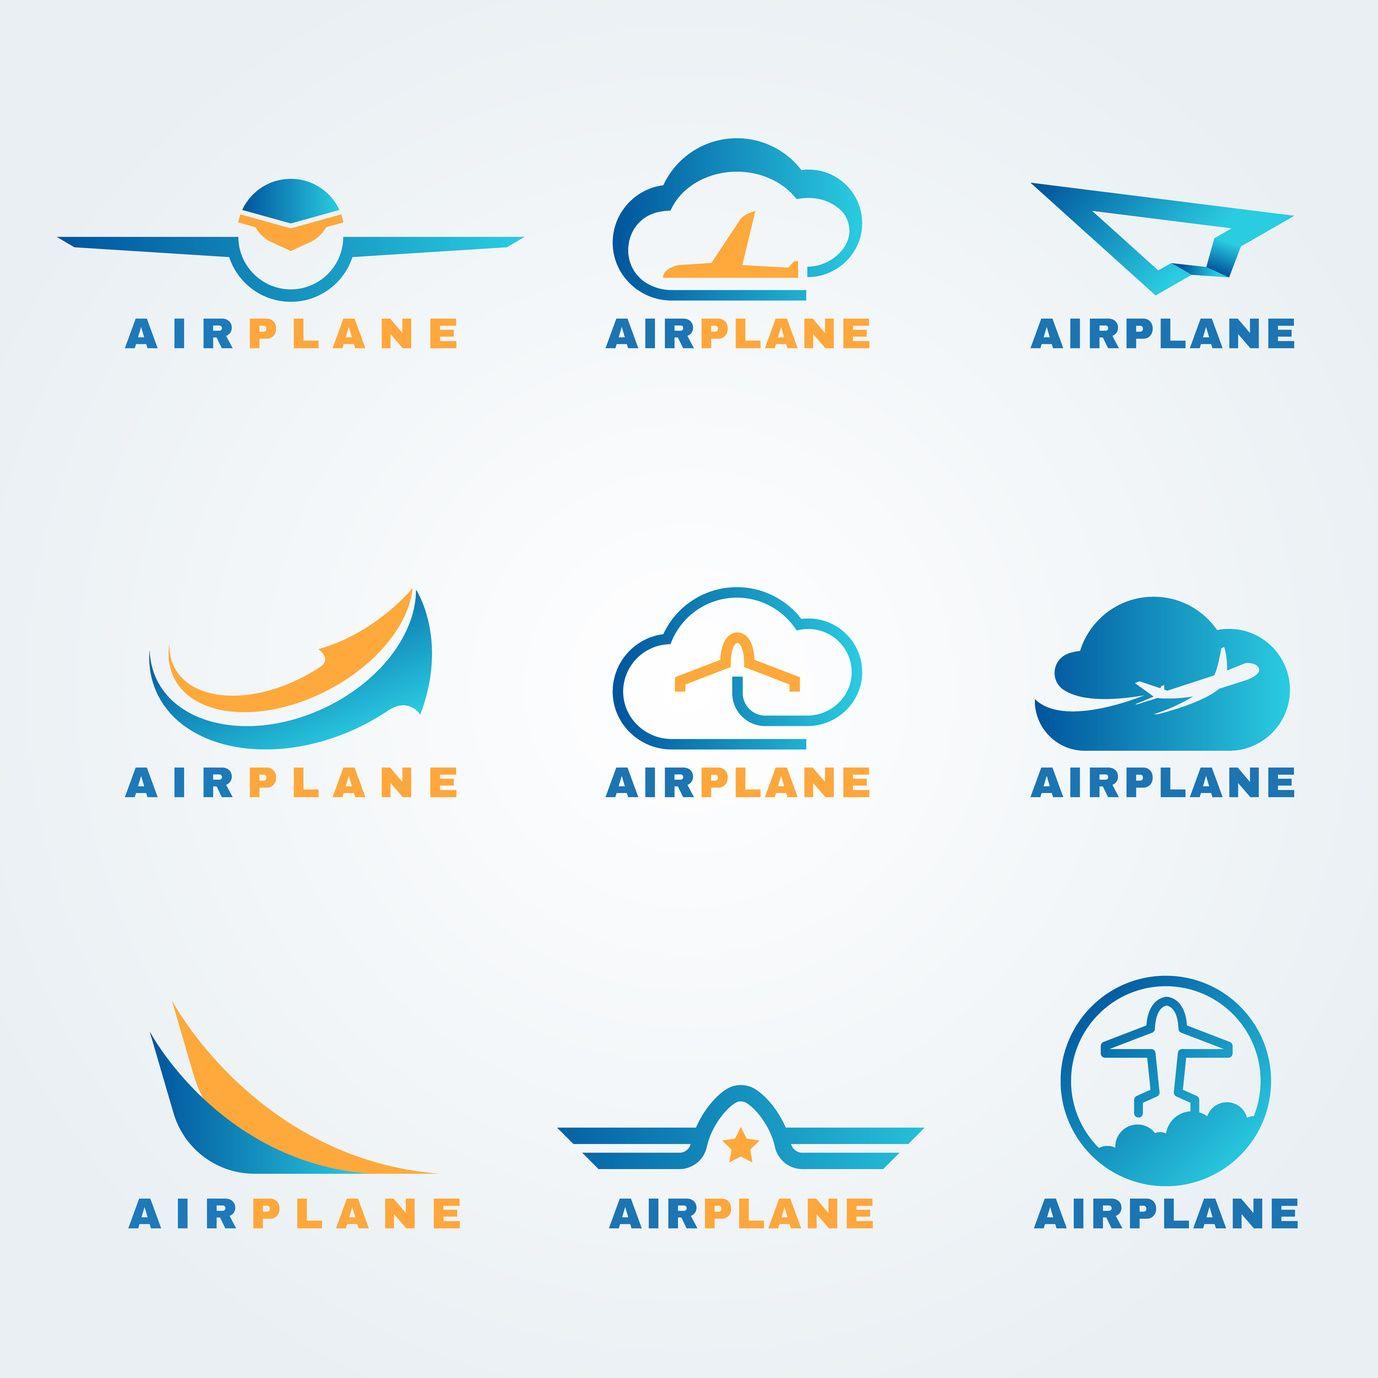 Airplane Logo - 5 Traits of an Unforgettable Airplane Logo Design